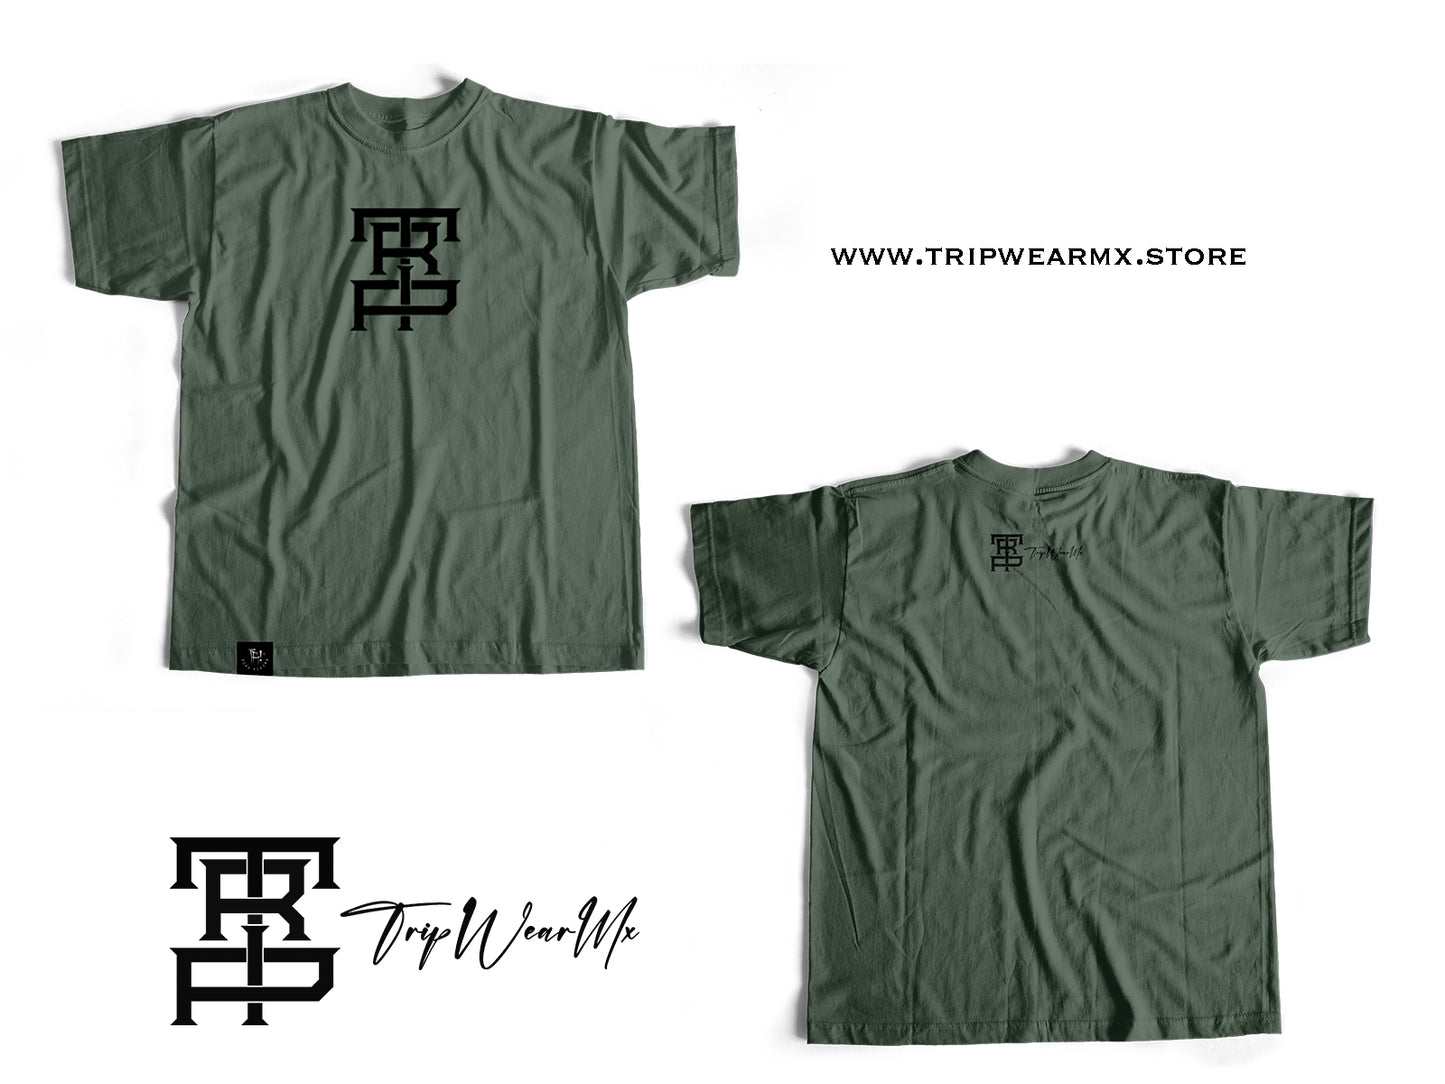 Monograma "TRIP" Front Army Green Tee.